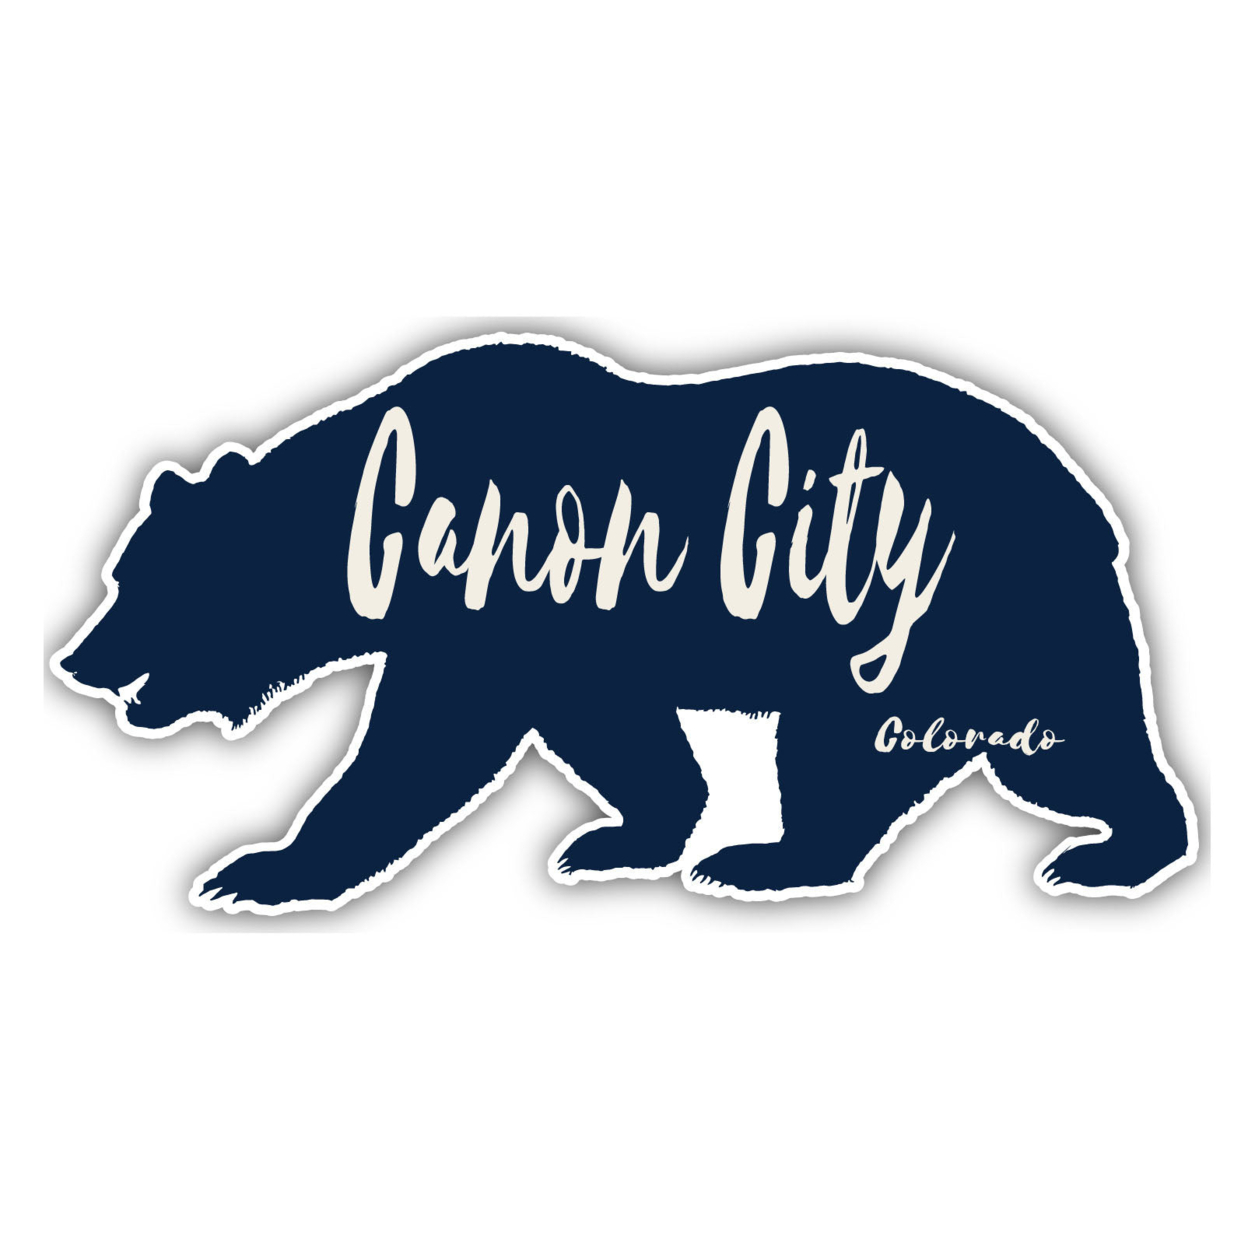 Canon City Colorado Souvenir Decorative Stickers (Choose Theme And Size) - Single Unit, 10-Inch, Bear